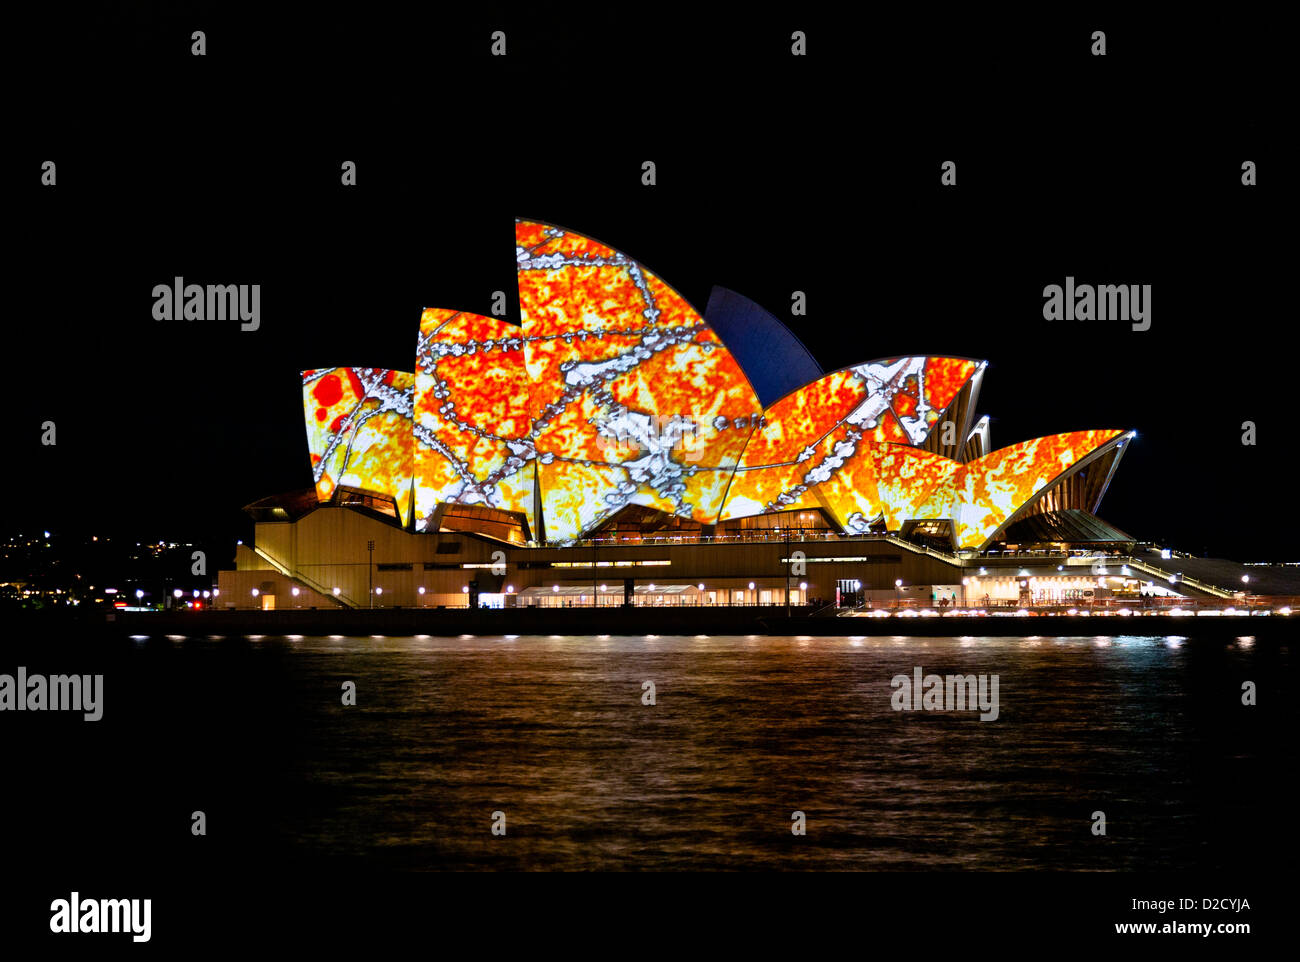 Sydney Opera House, animierte Grafik Projektionen "Beleuchtung die Segel" während des Festivals Vivid Sydney Stockfoto